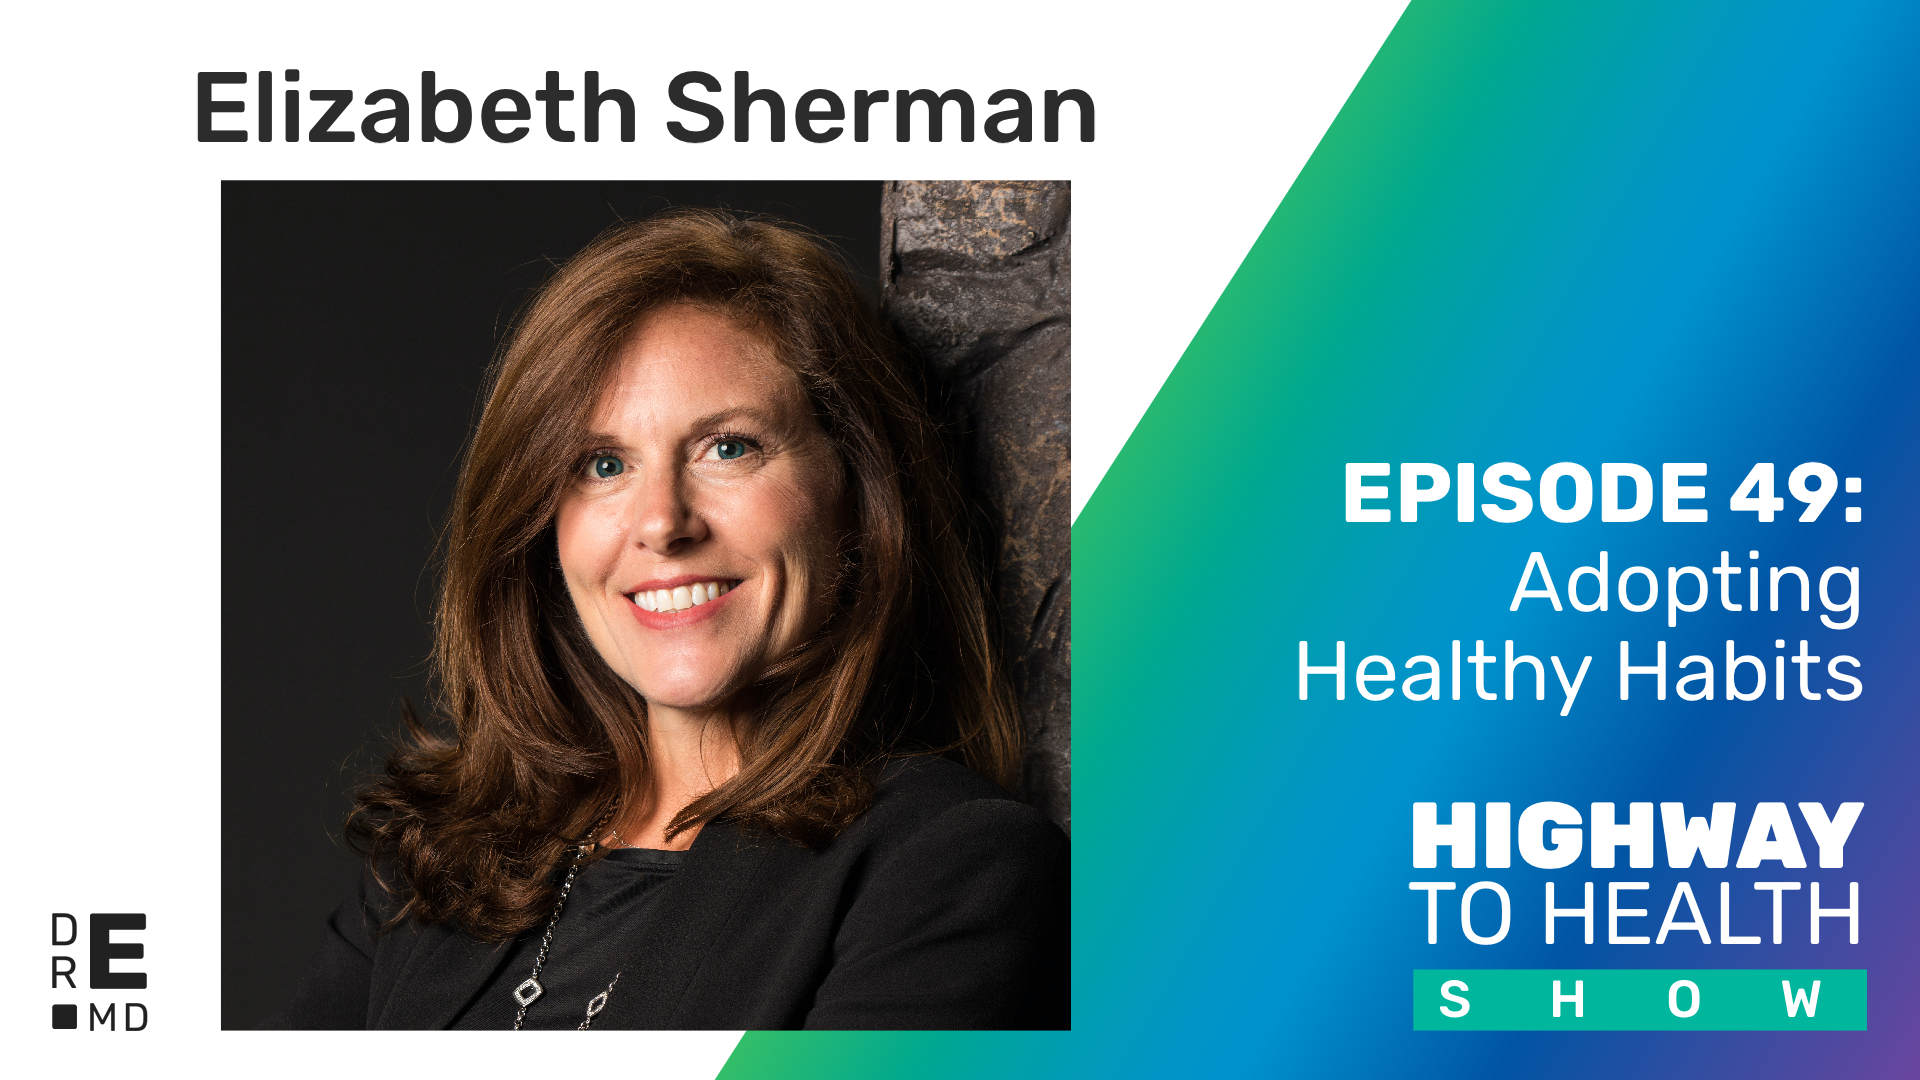 Highway to Health: Ep 49 - Elizabeth Sherman